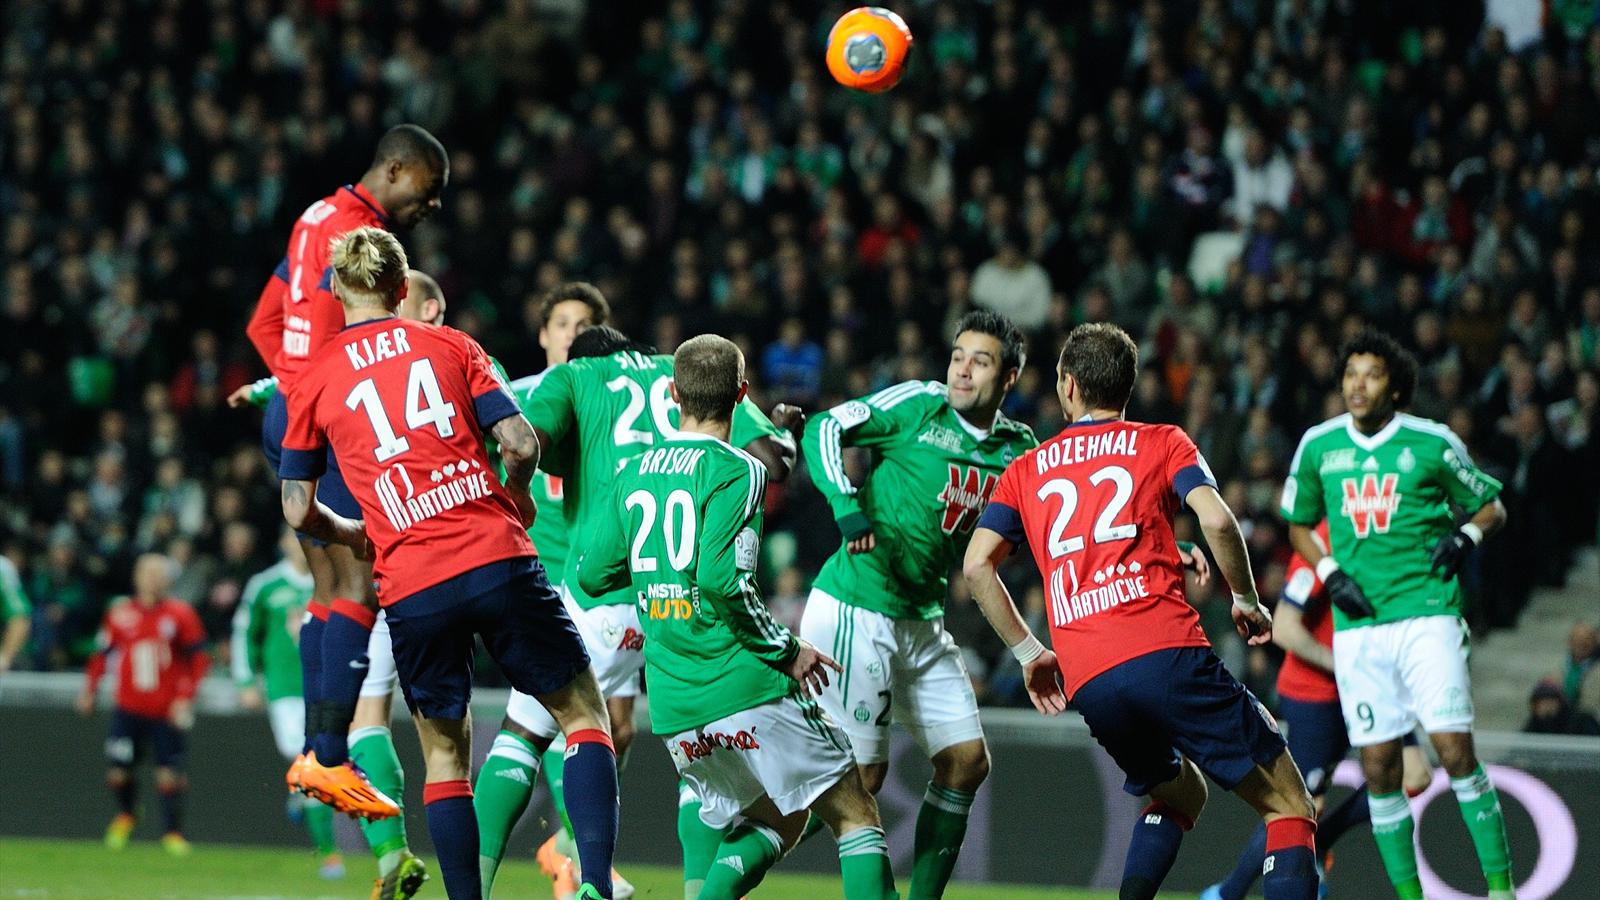 Match LOSC Lille vs AS Saint-Etienne en direct live streaming